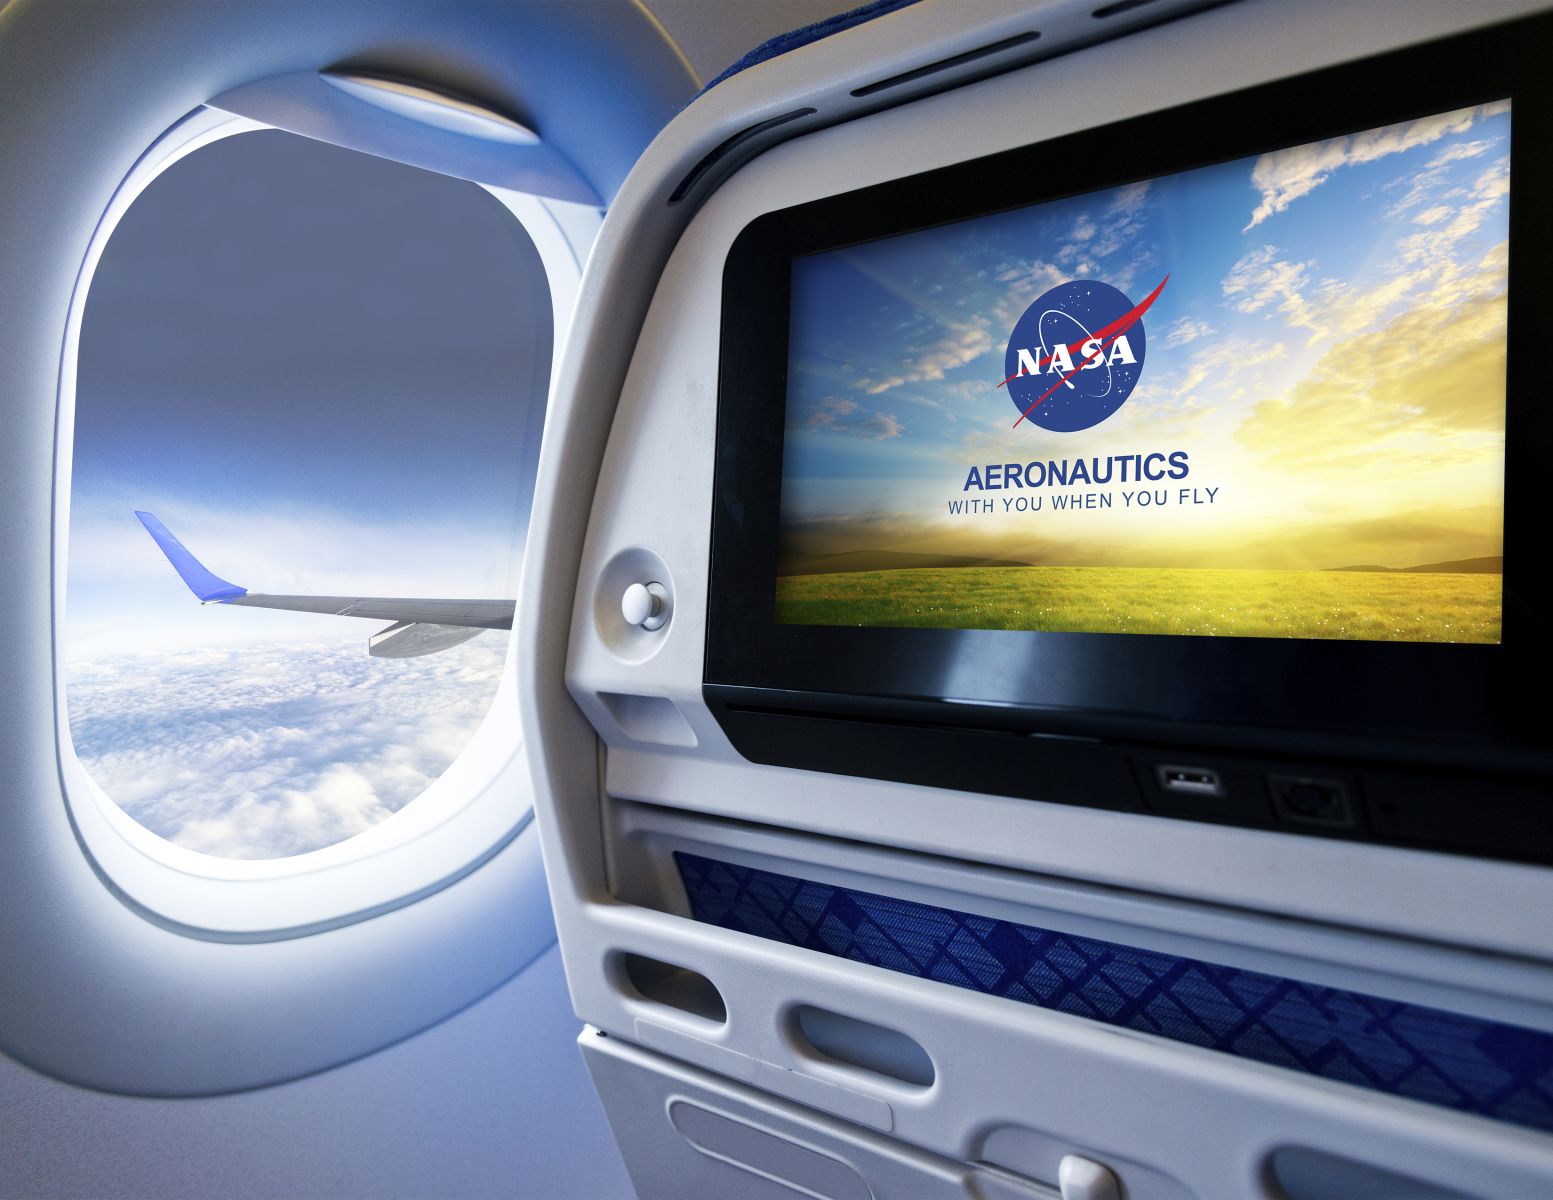 Screen on the back of an airplane seat showing NASA Aeronautics.